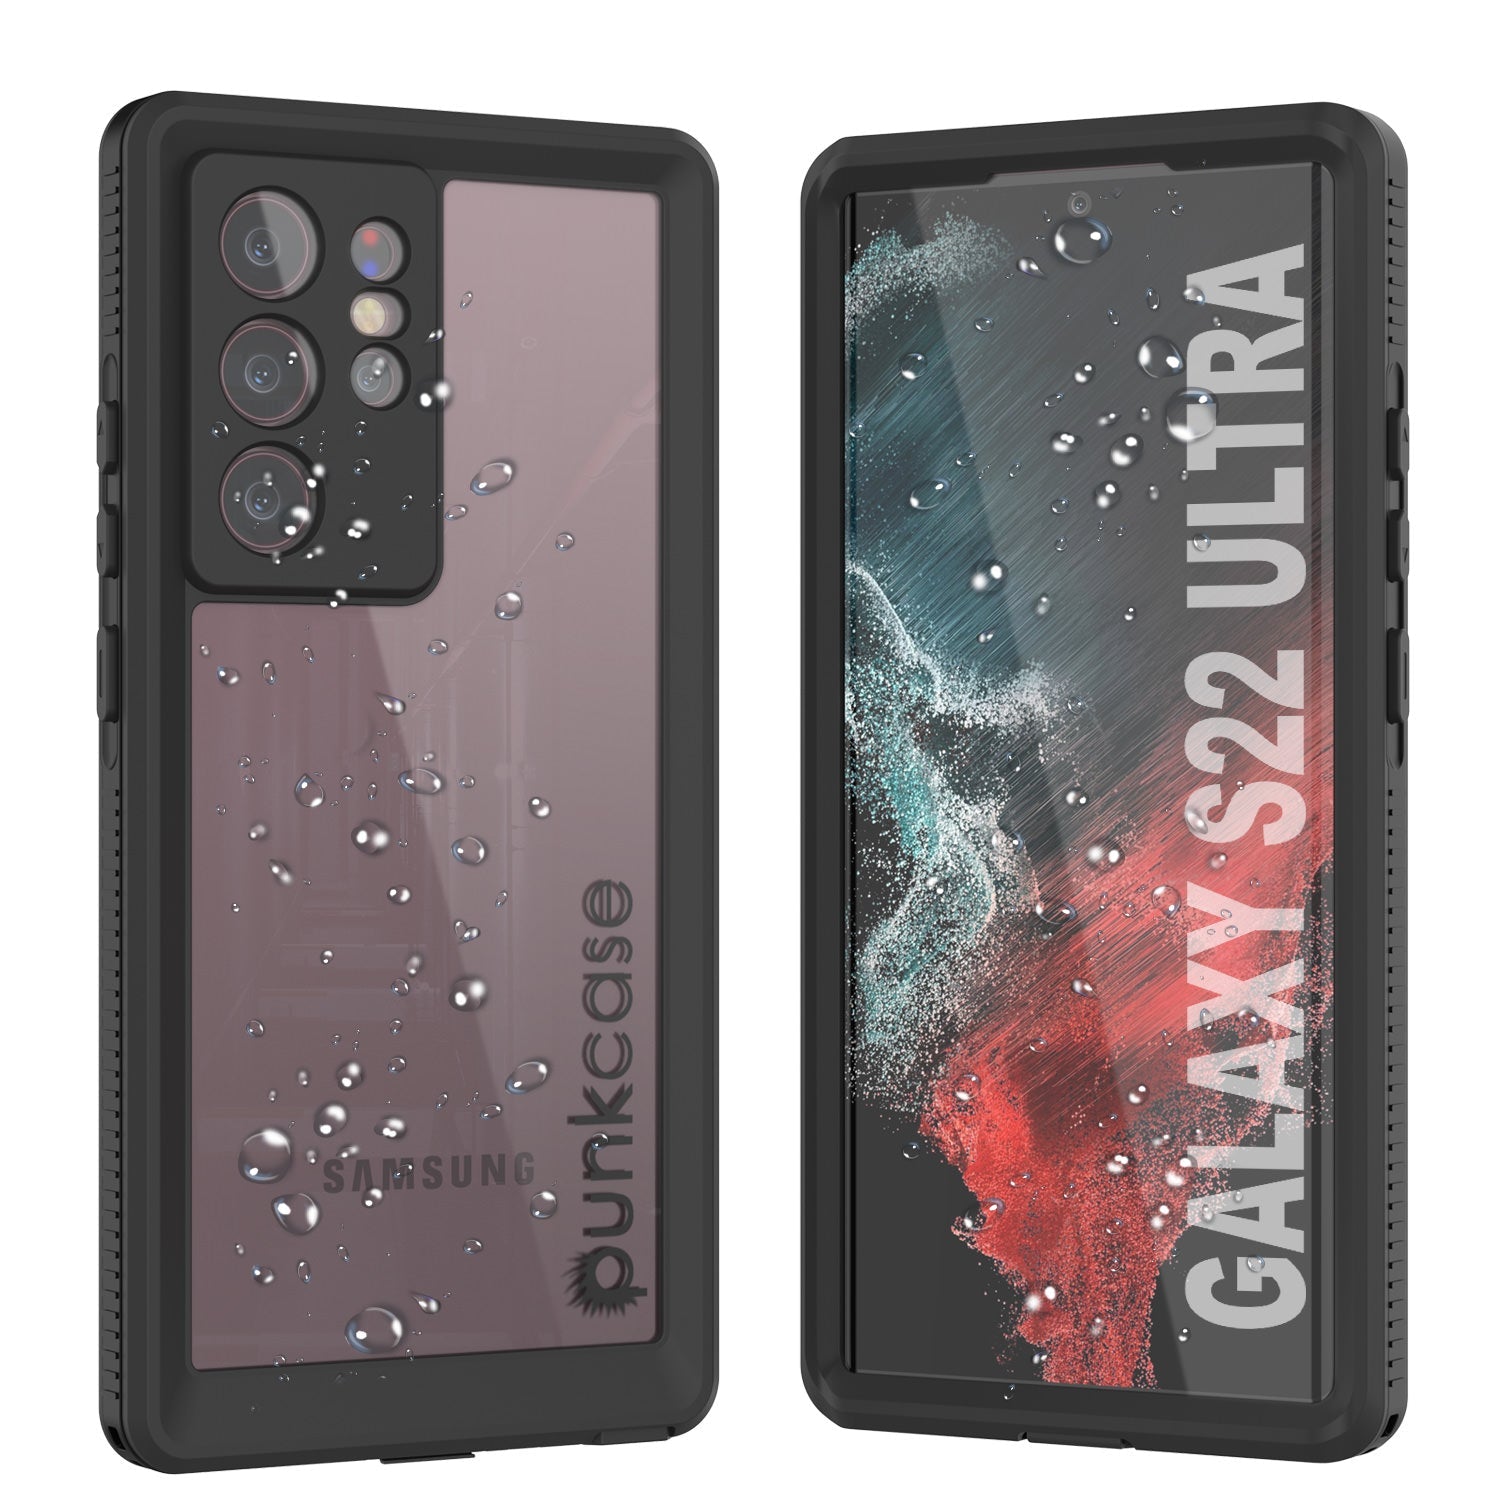 Galaxy S22 Ultra Waterproof Case PunkCase Ultimato Black Thin 6.6ft Underwater IP68 Shock/Snow Proof [Black]